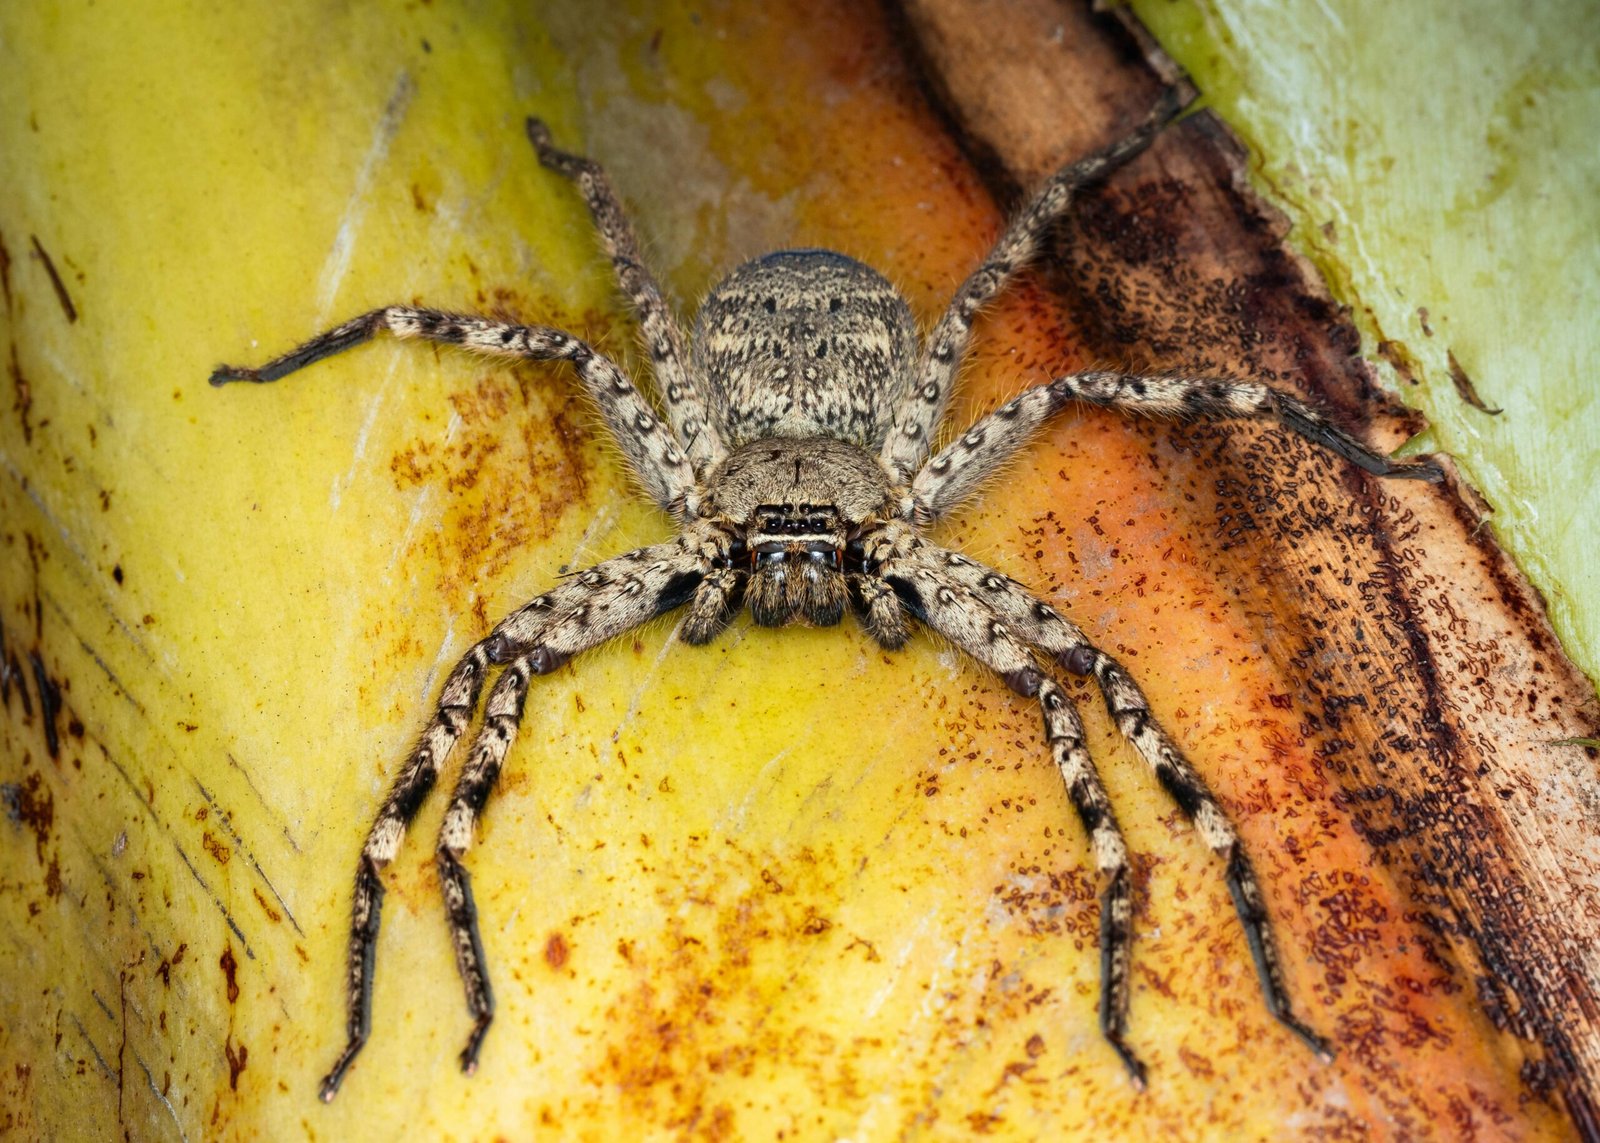 Can Tarantulas Face Threats From Larger Predatory Arachnids Like Vinegaroons?